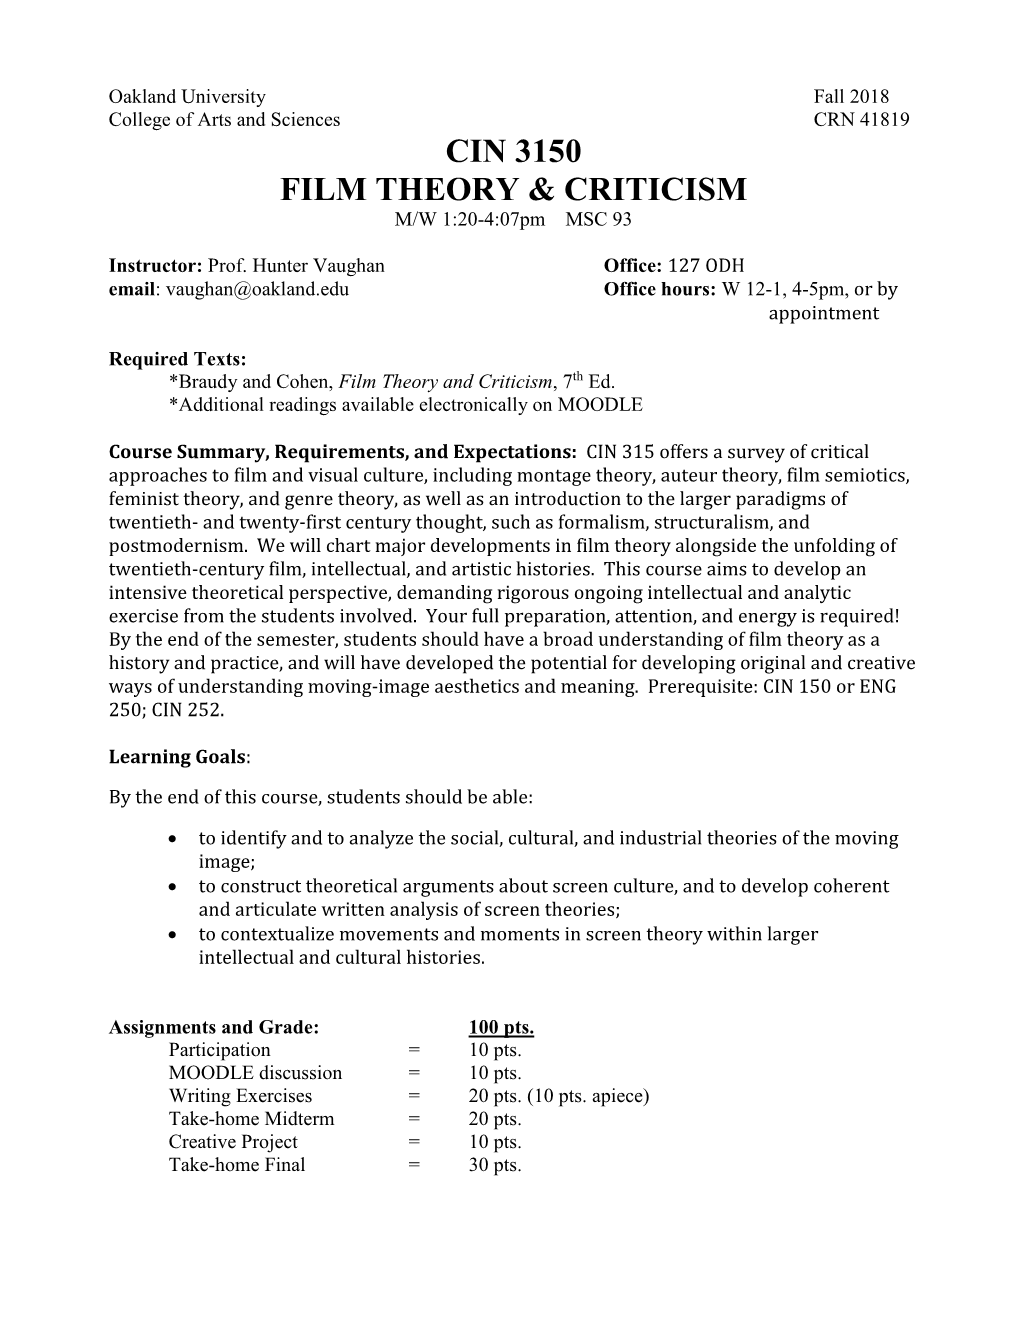 Cin 3150 Film Theory & Criticism